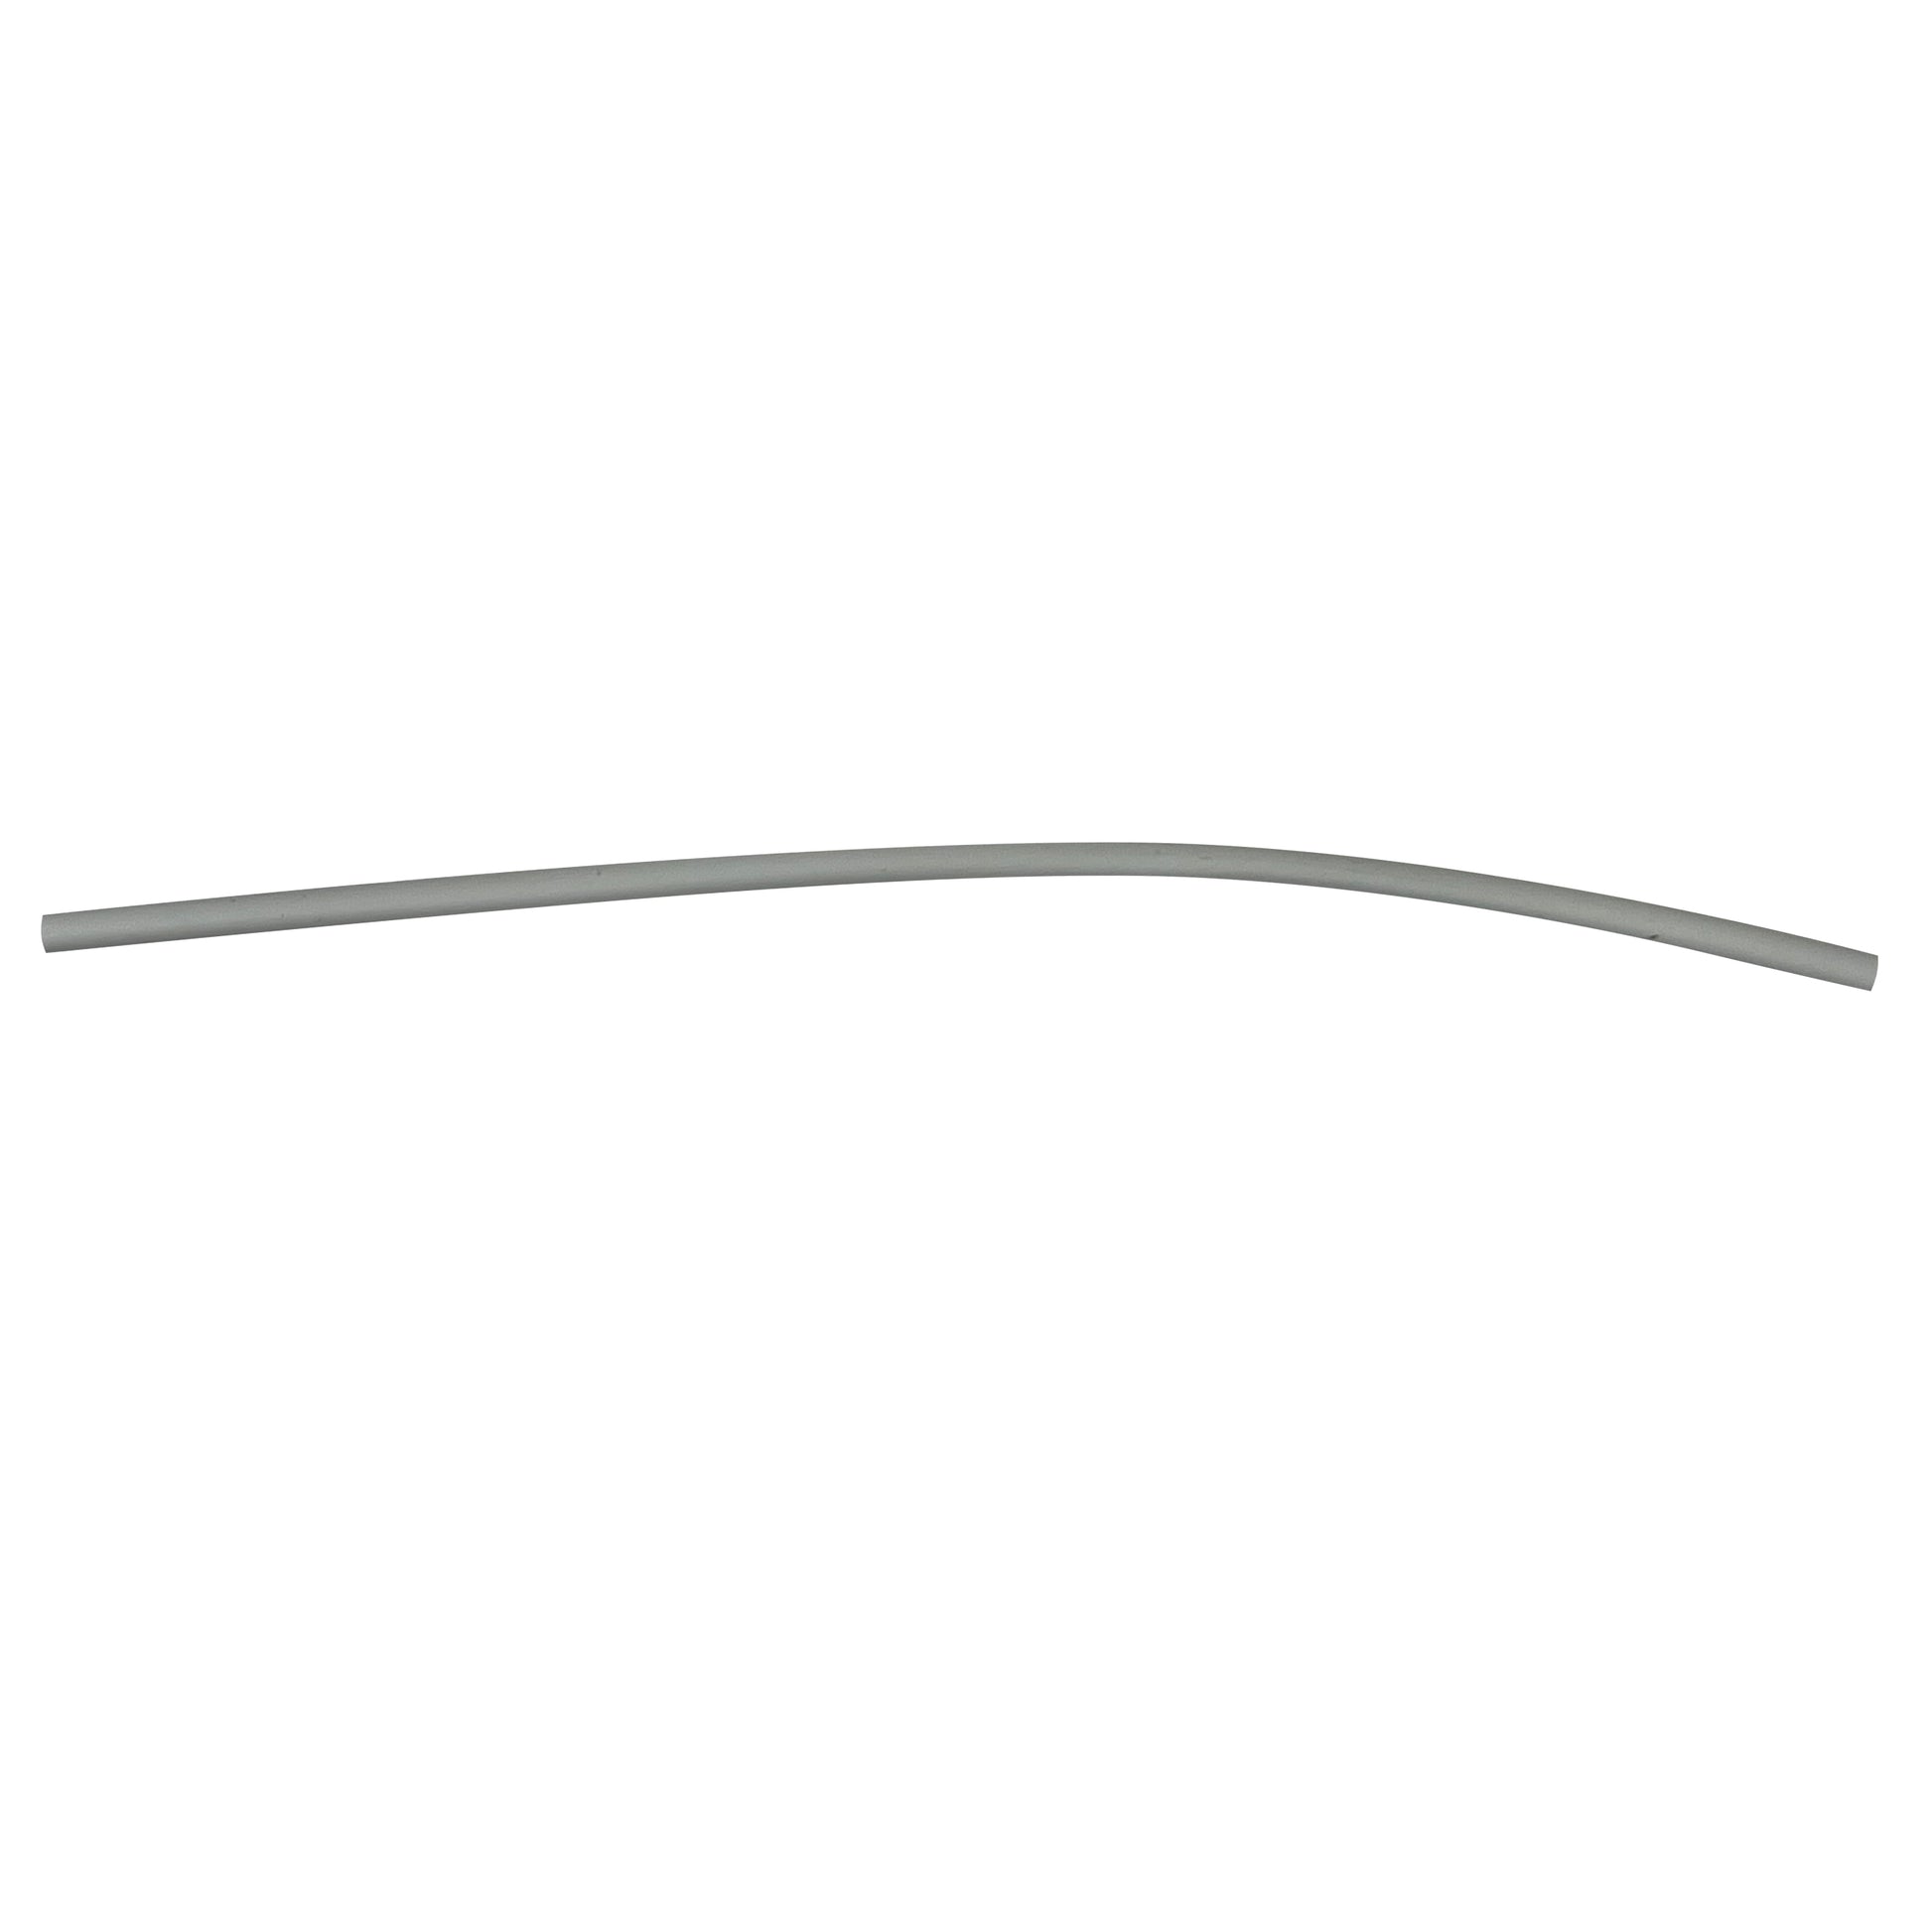 Flexible Thin Single Wall Non-Adhesive Heat Shrink Tubing 2:1 White 3/32" ID - 25' Ft Spool